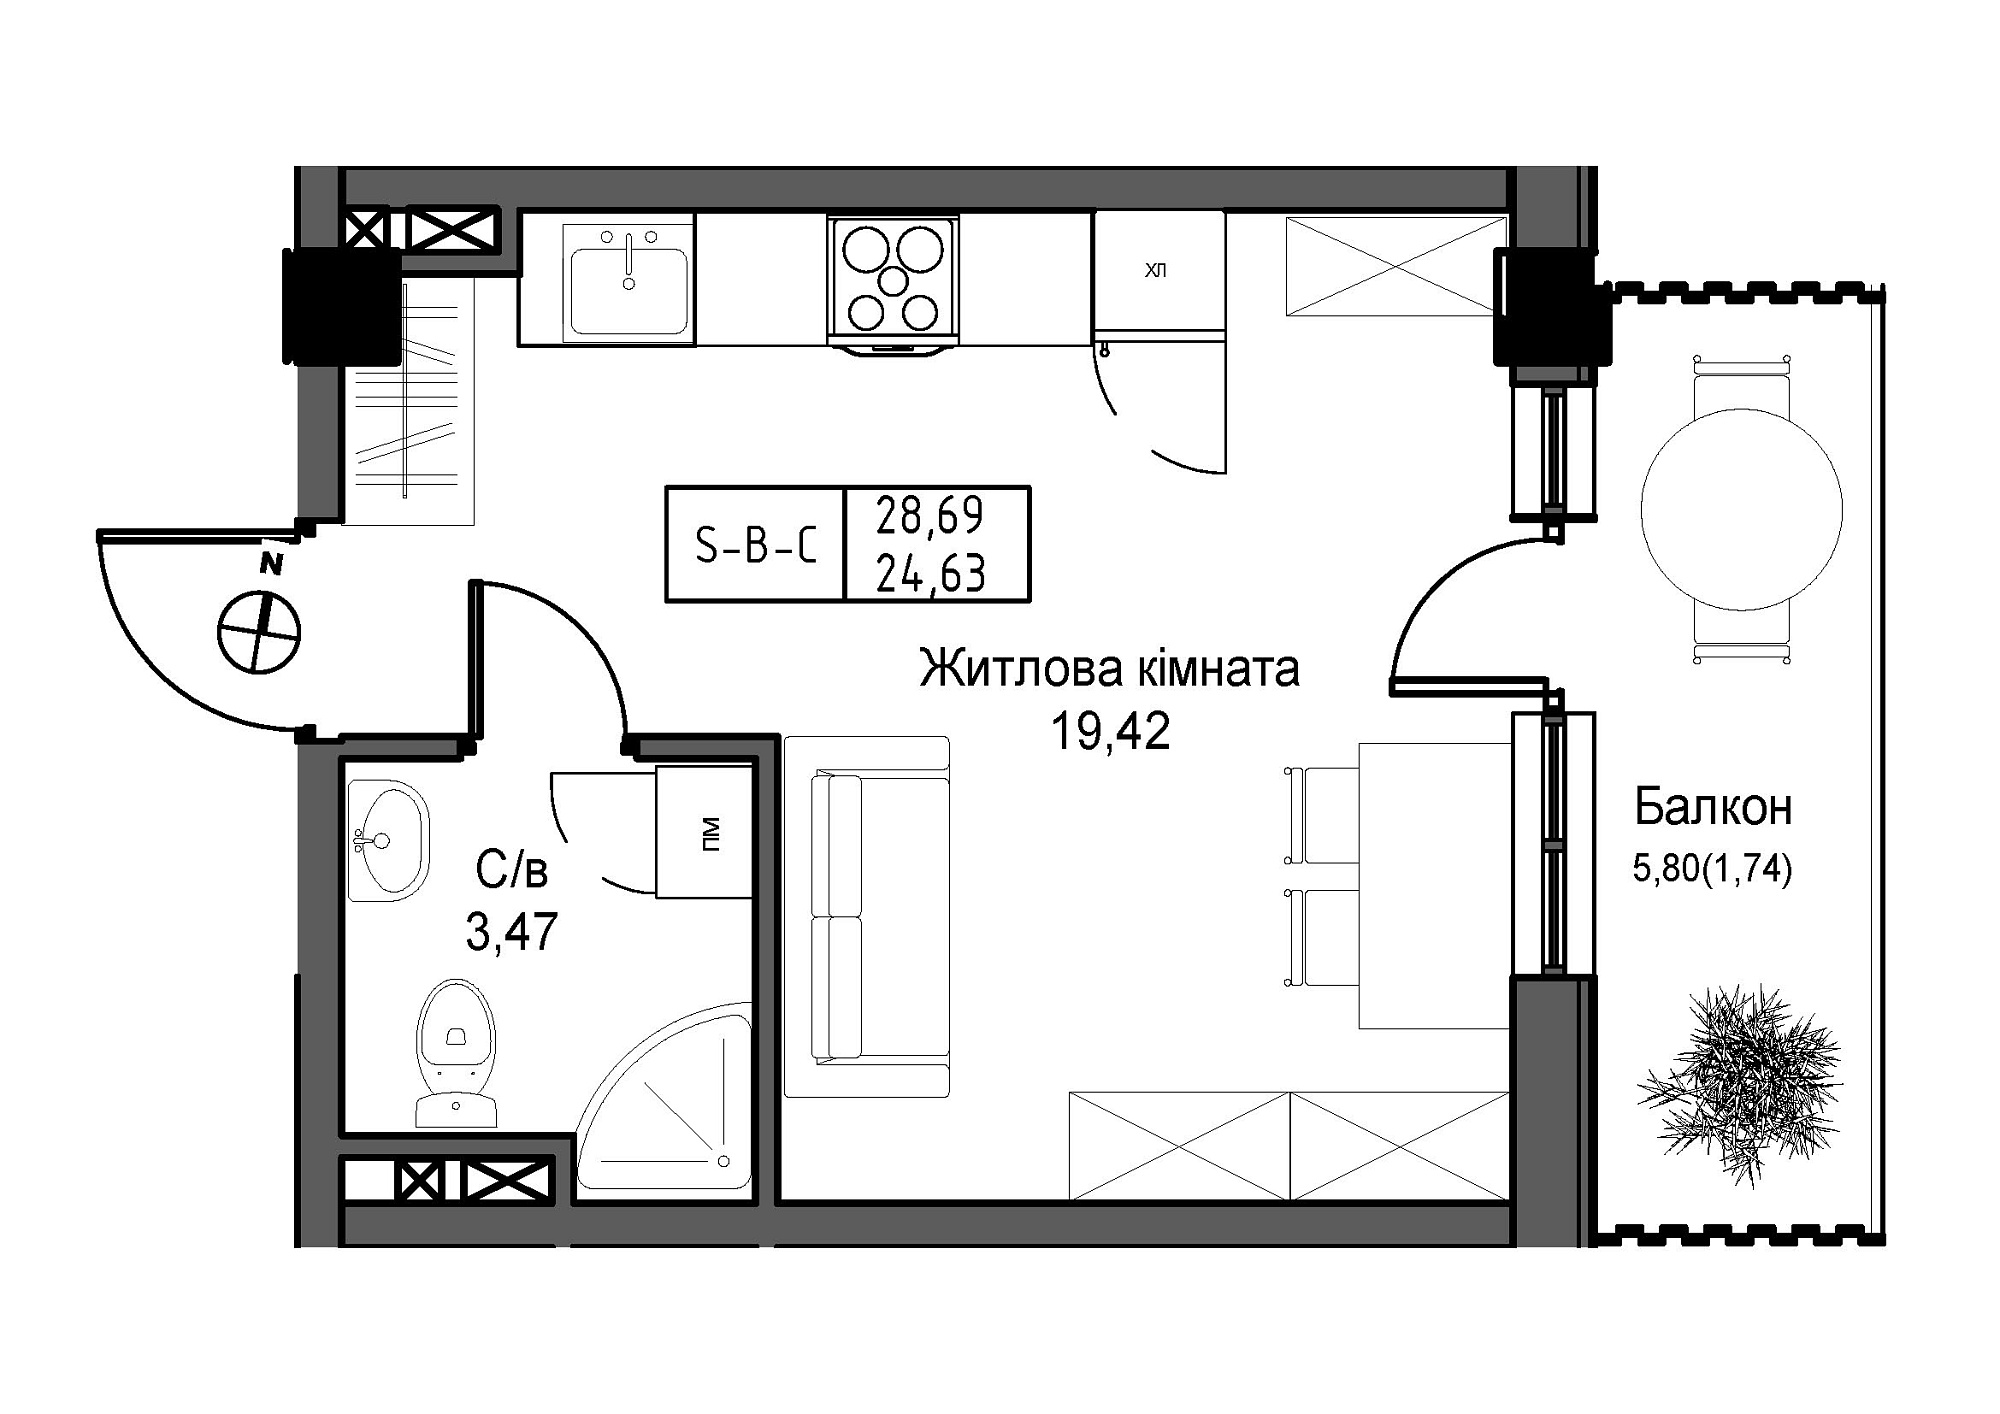 Планування Smart-квартира площею 24.63м2, UM-007-10/0005.